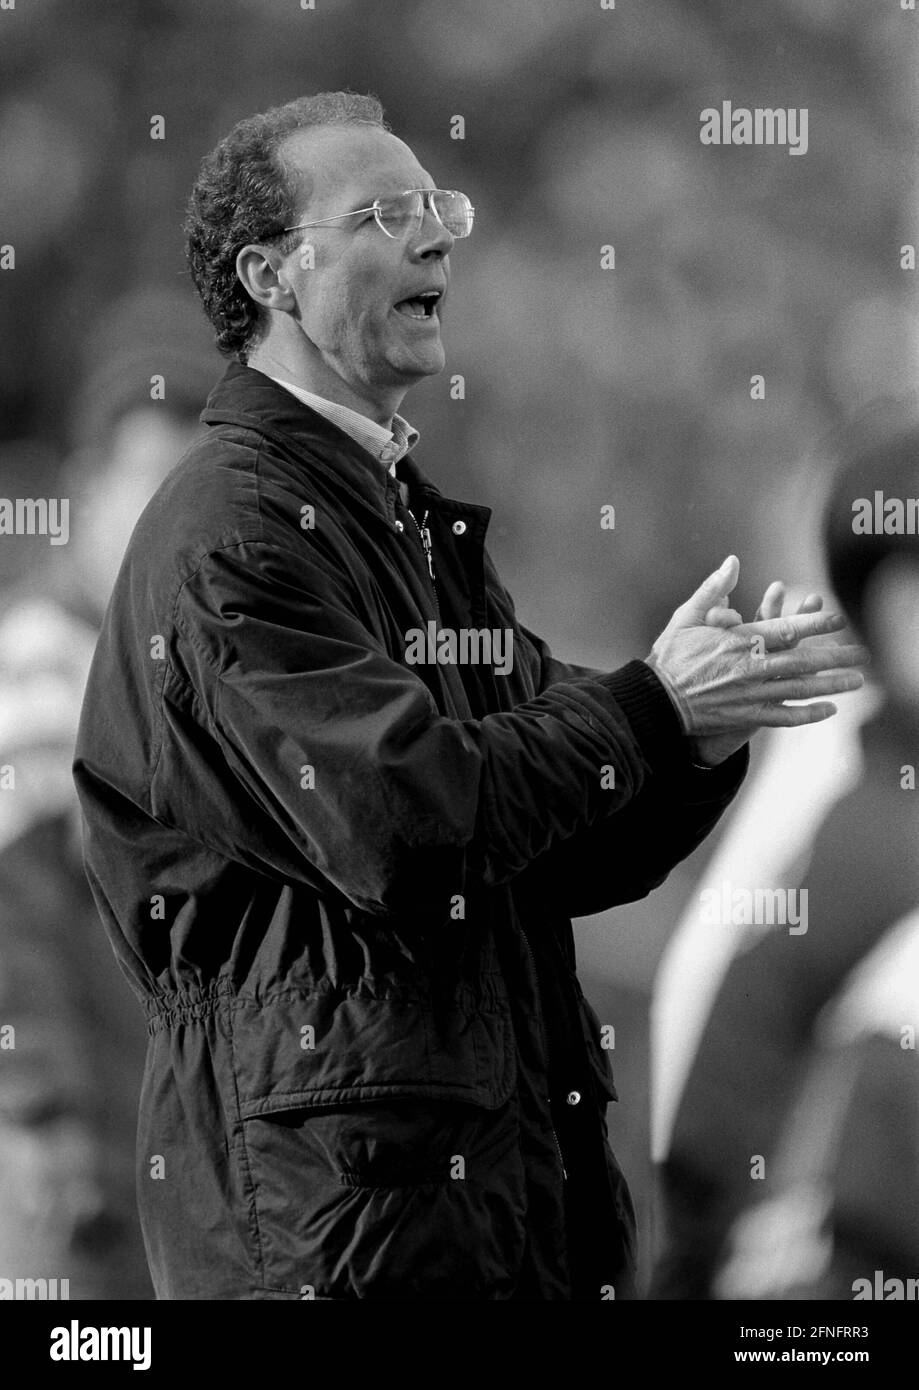 FUSSBALL 1. BUNDESLIGA SAISON 1993/1994 Bayern Muenchen - 1. FC Koeln 02.04.1994 Coach Franz Beckenbauer (FC Bayern Muenchen) PHOTO: WEREK Pressebildagentur xxNOxMODELxRELEASExx [automated translation] Stock Photo